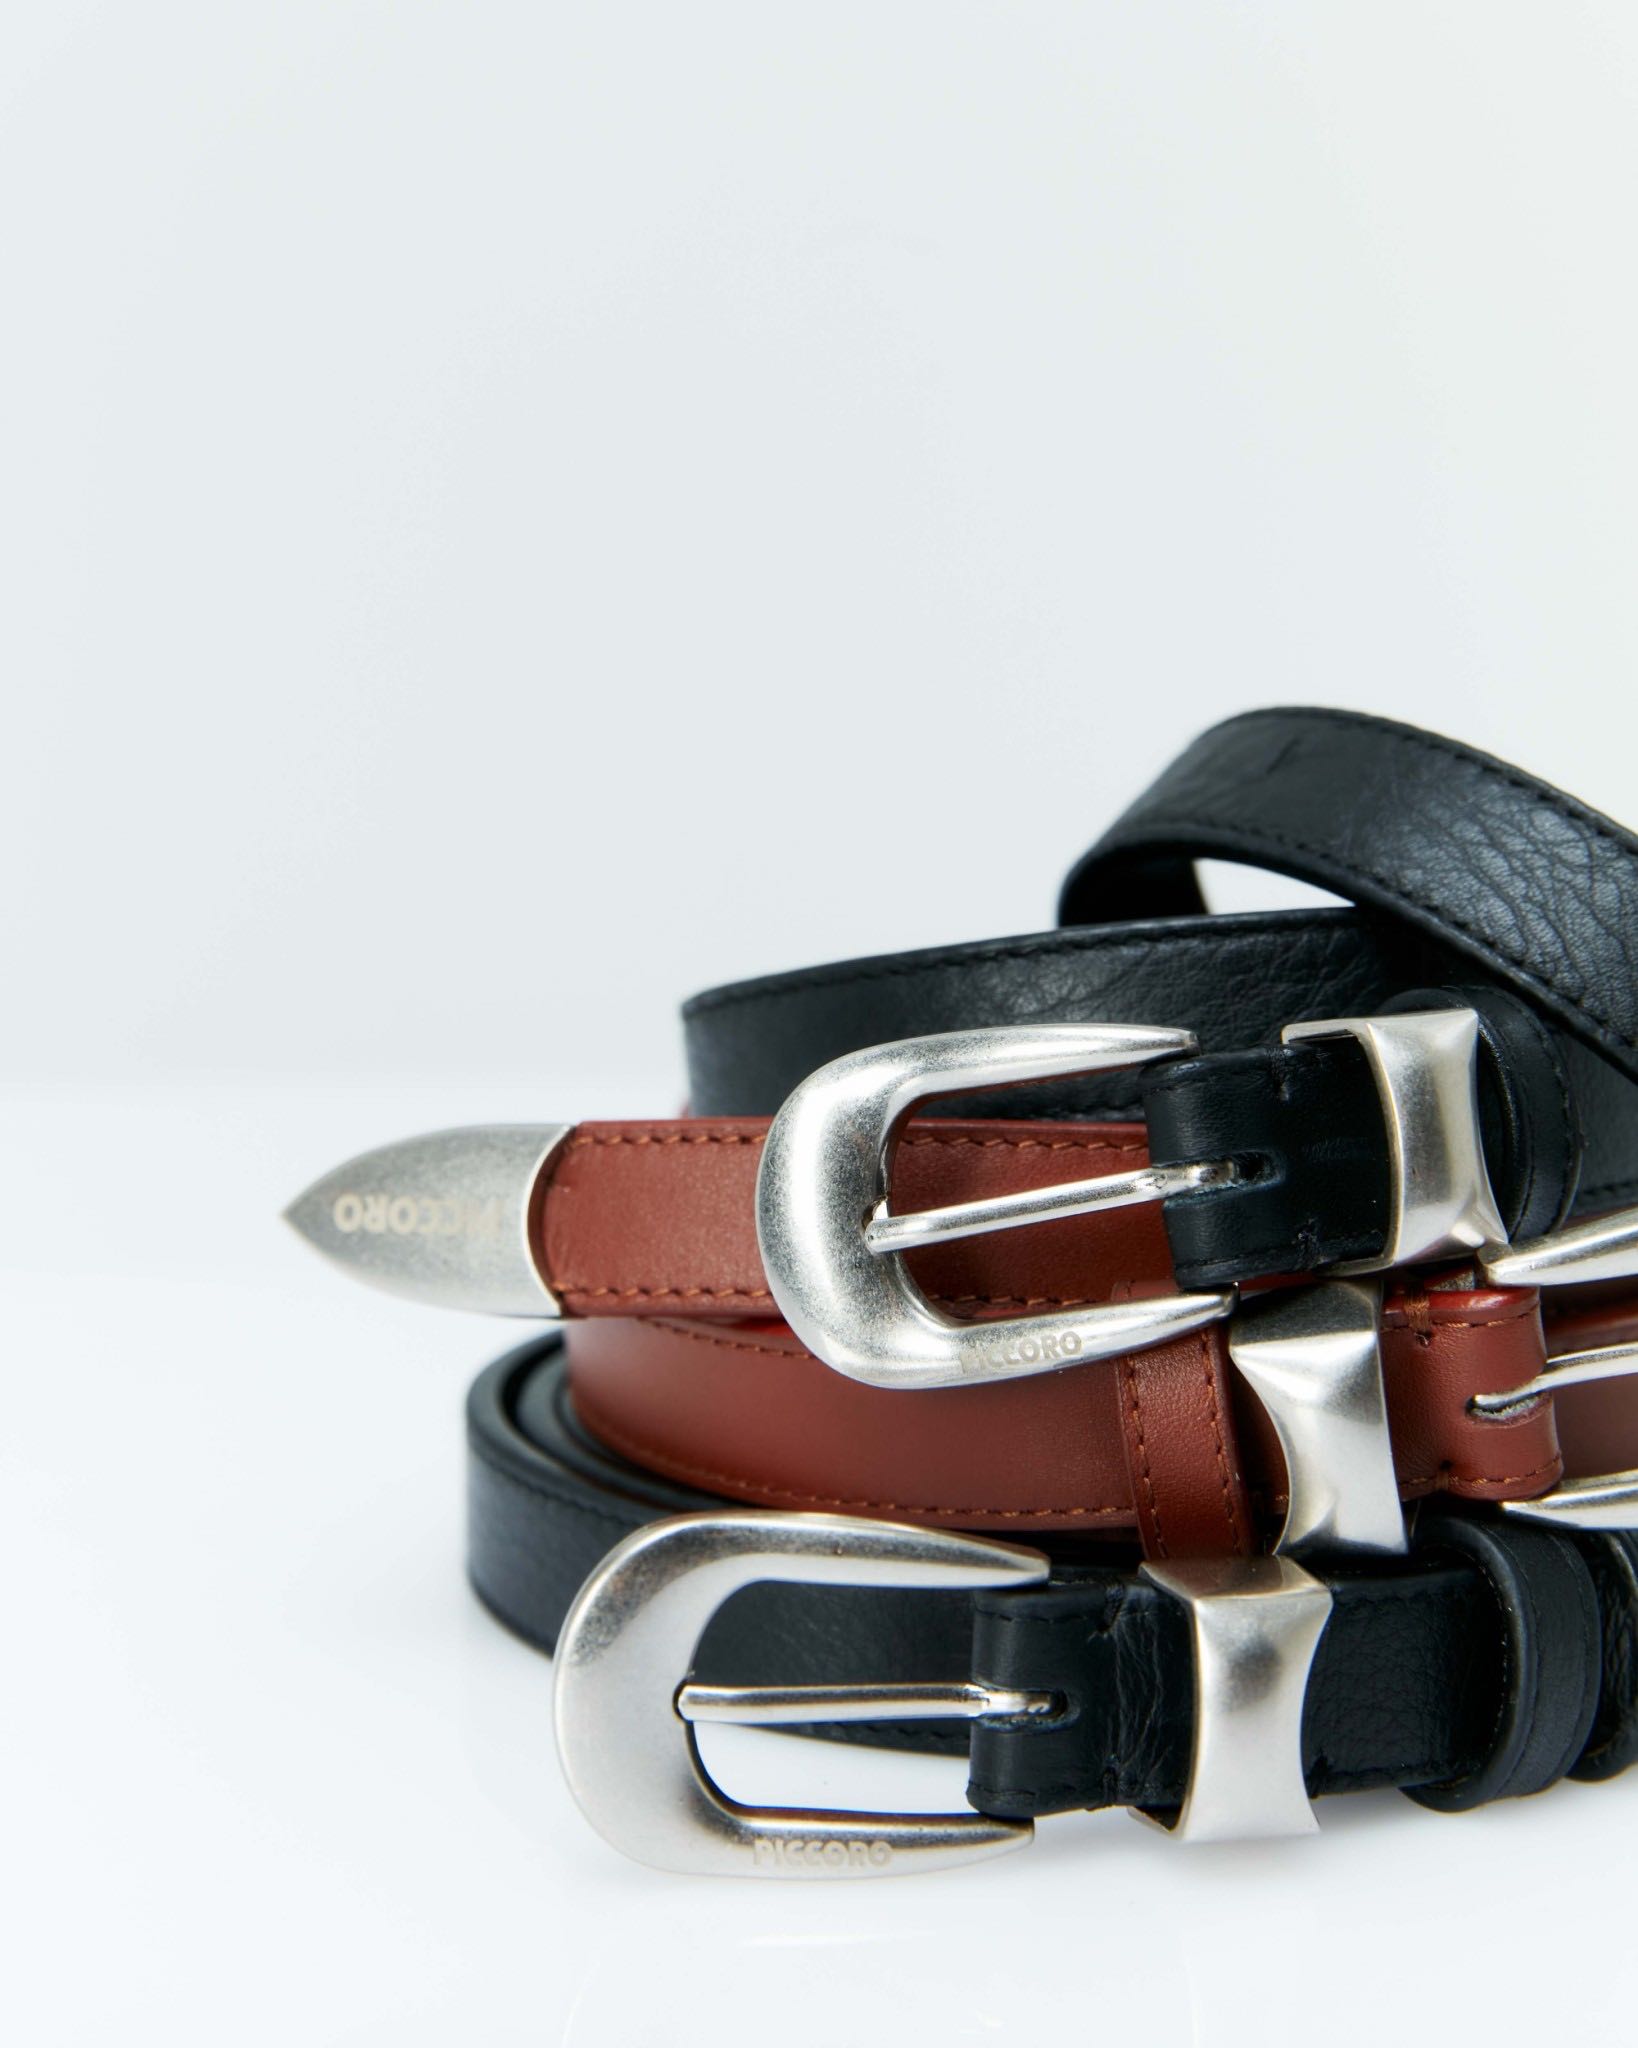 Piccoro - Slim Leather Belt